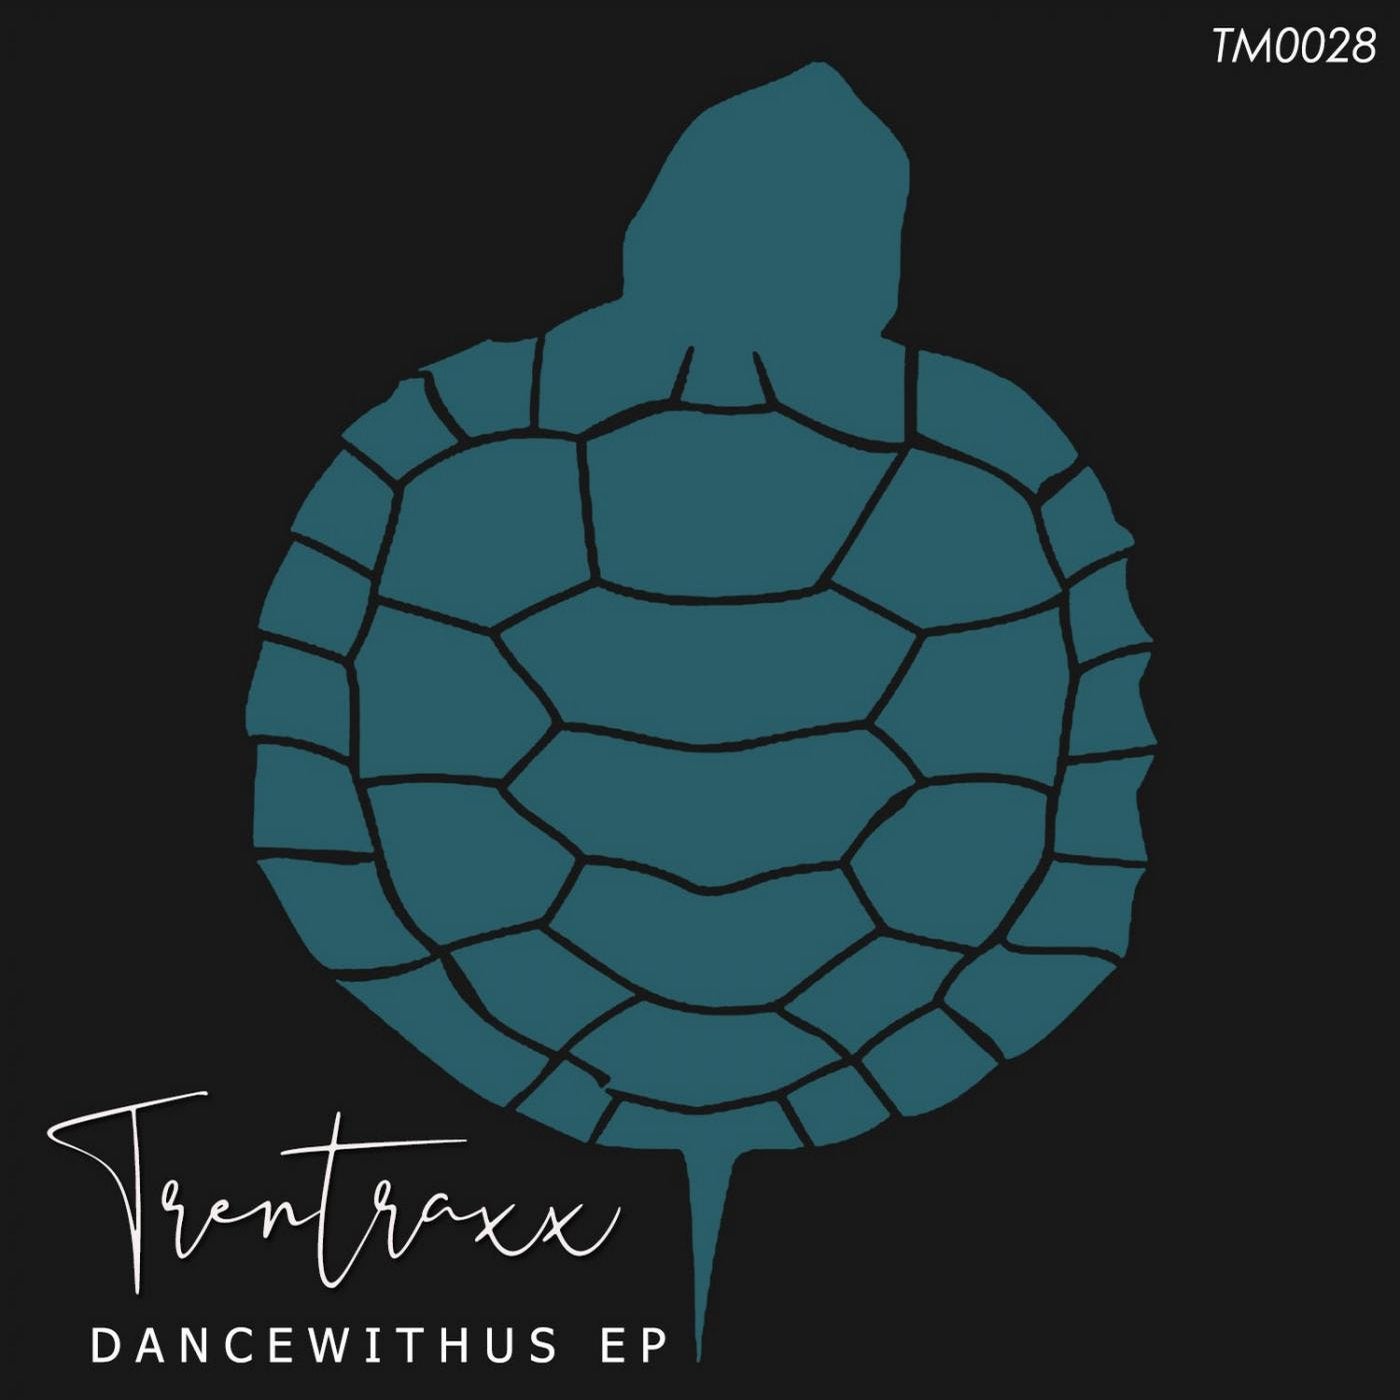 DanceWithus EP